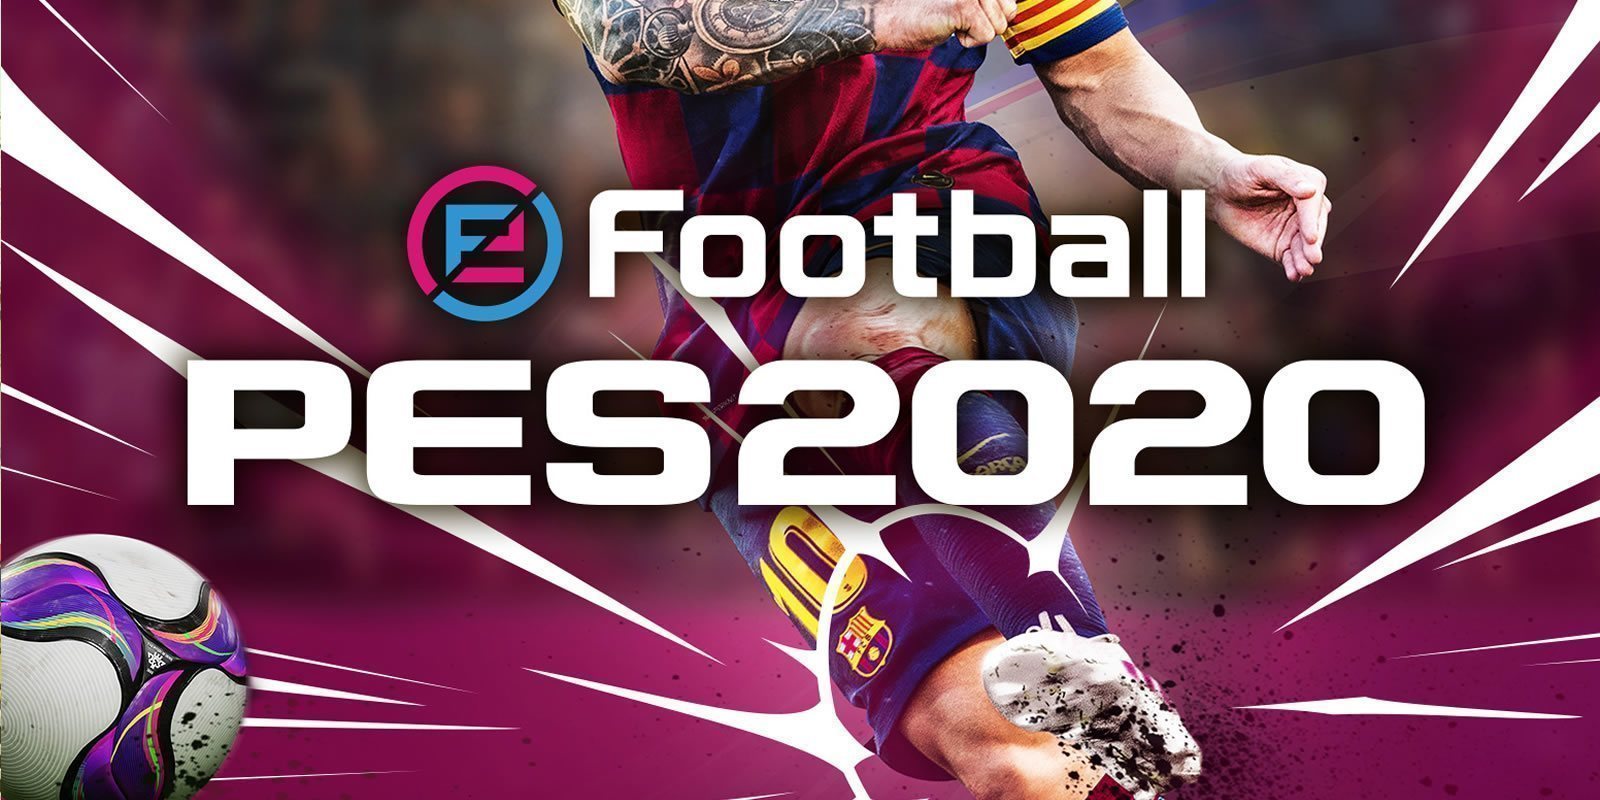 'eFootball PES 2020' se une al Bayern de Múnich